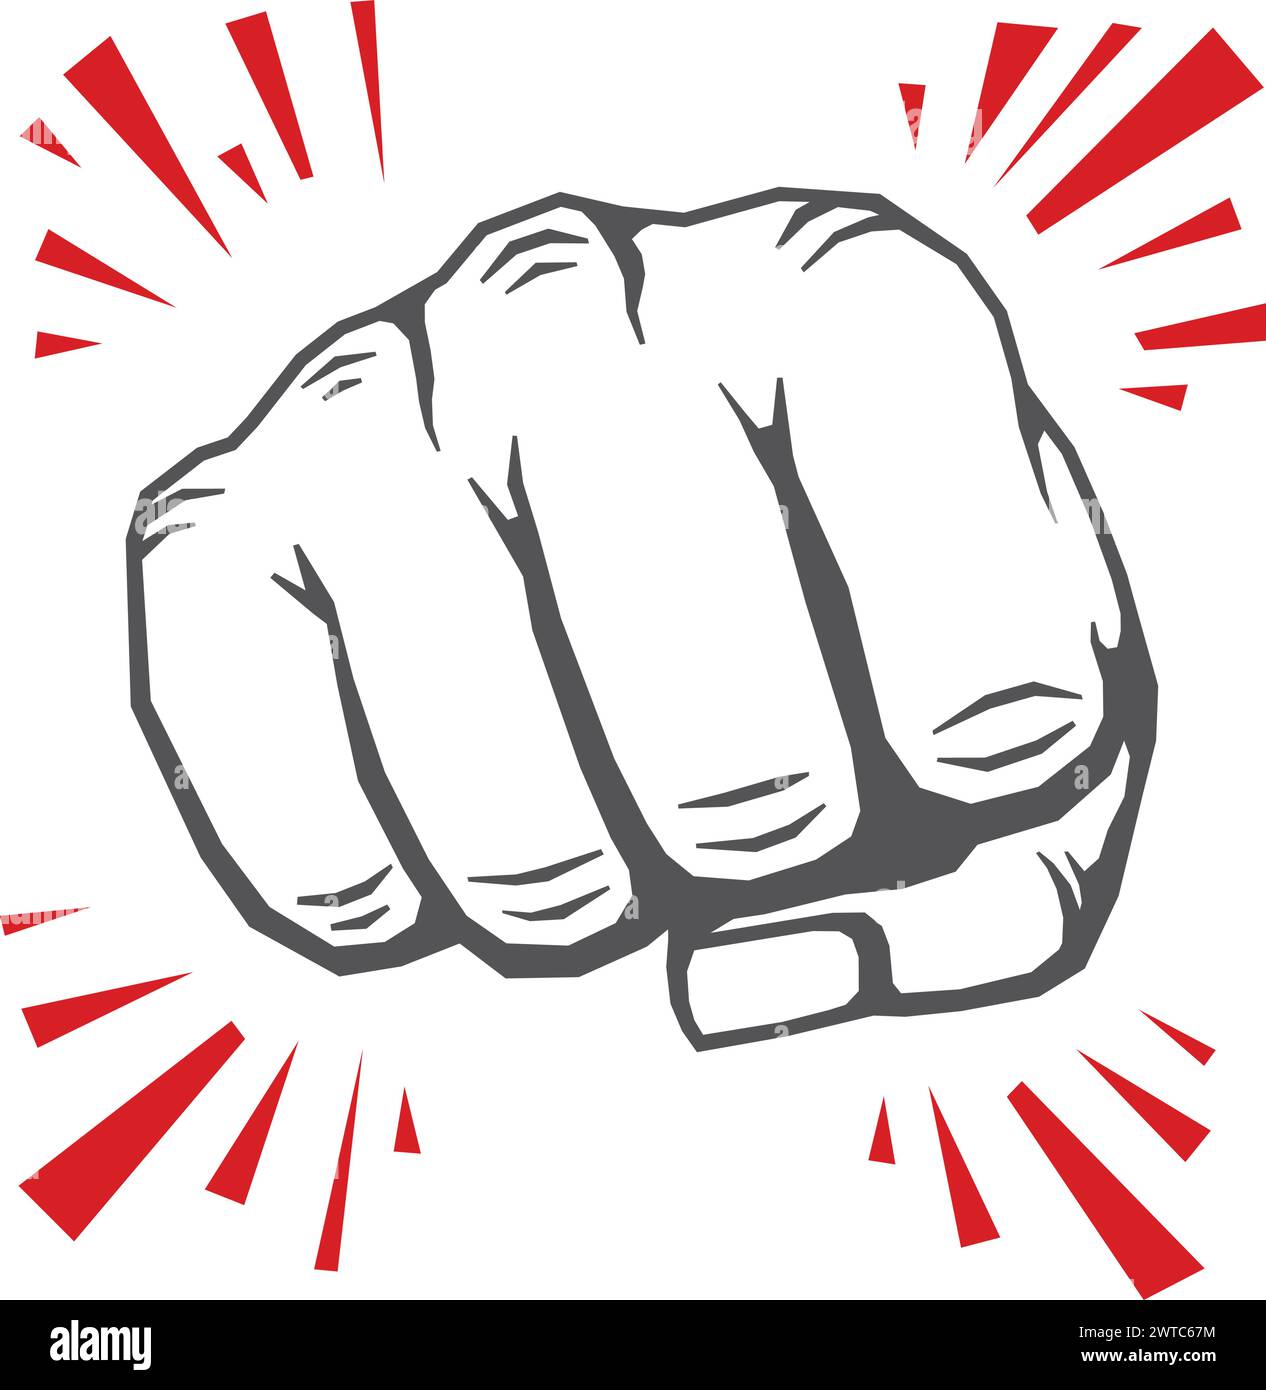 Punch logo. Fist fight symbol. Strike icon Stock Vector